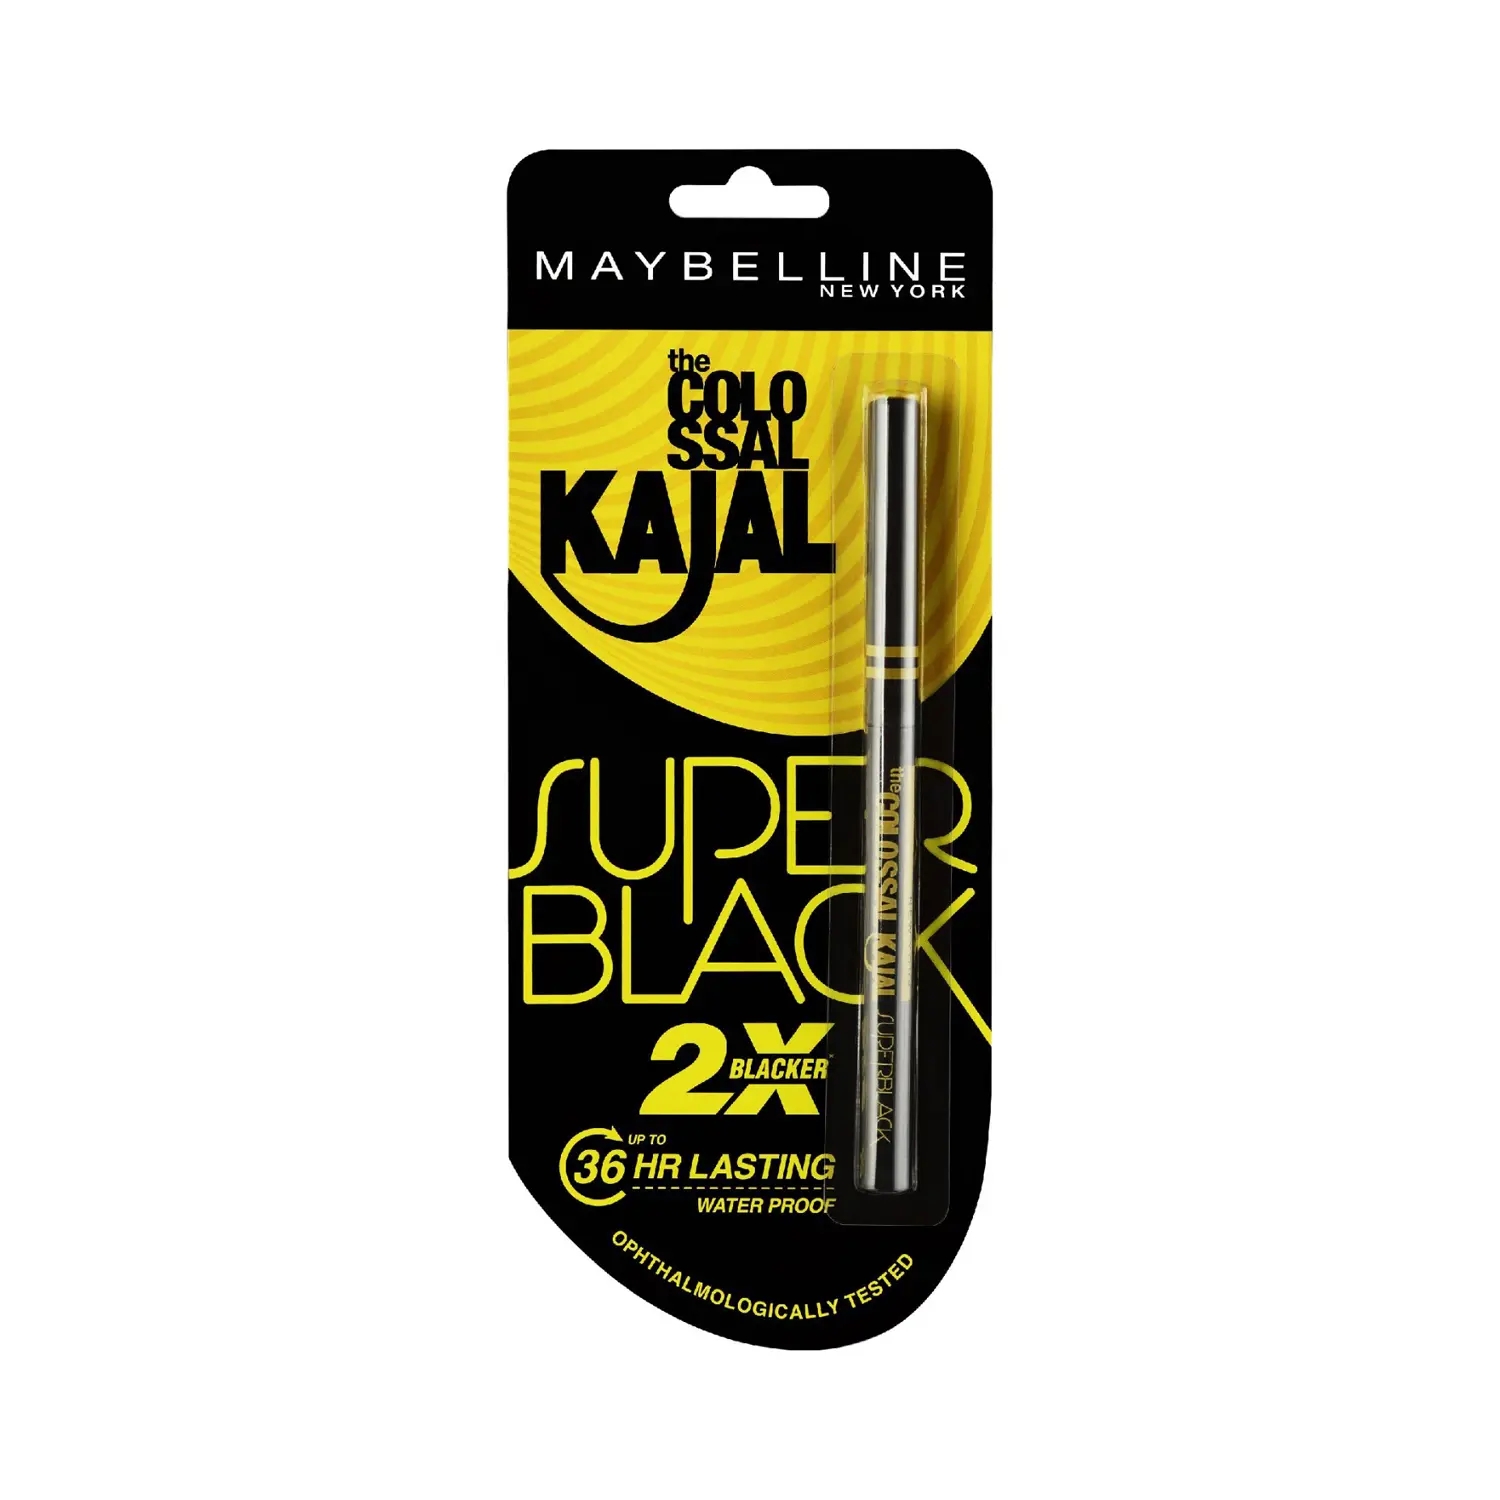 Maybelline New York | Maybelline New York Colossal Kajal - Super Black (0.35g)